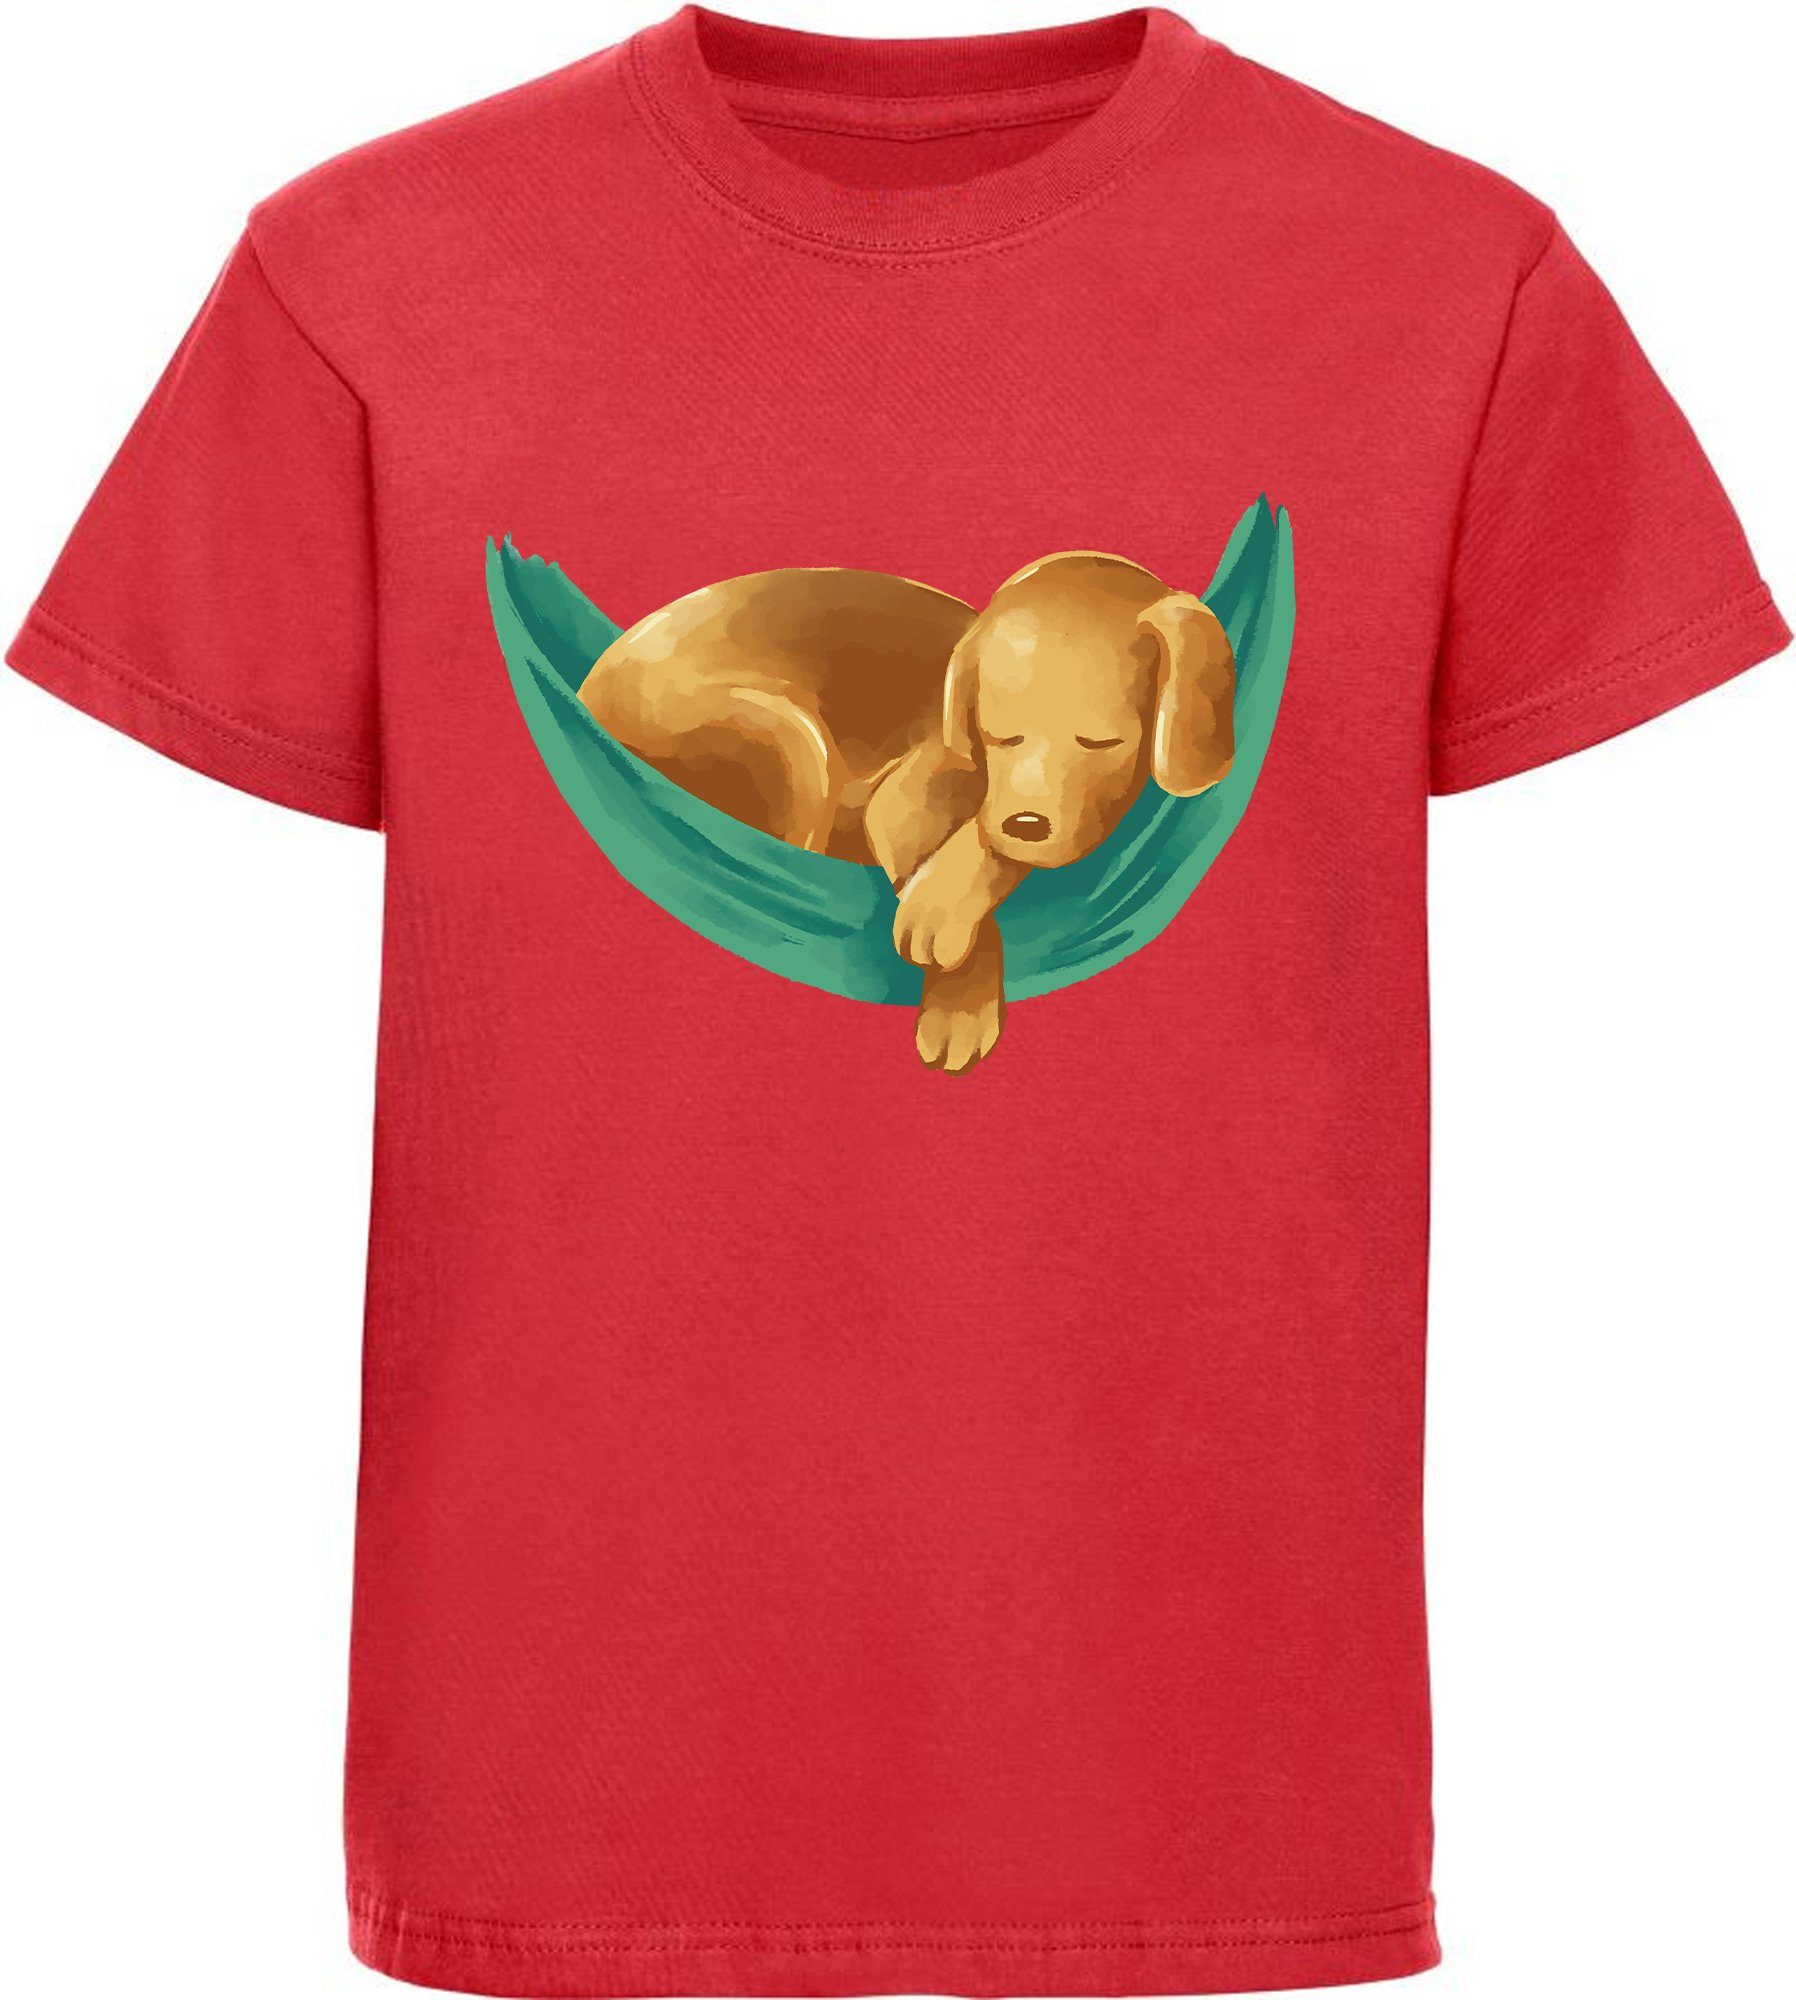 MyDesign24 T-Shirt Kinder Hunde Print Shirt bedruckt - Labrador Welpe in Hängematte Baumwollshirt mit Aufdruck, i245 rot | T-Shirts